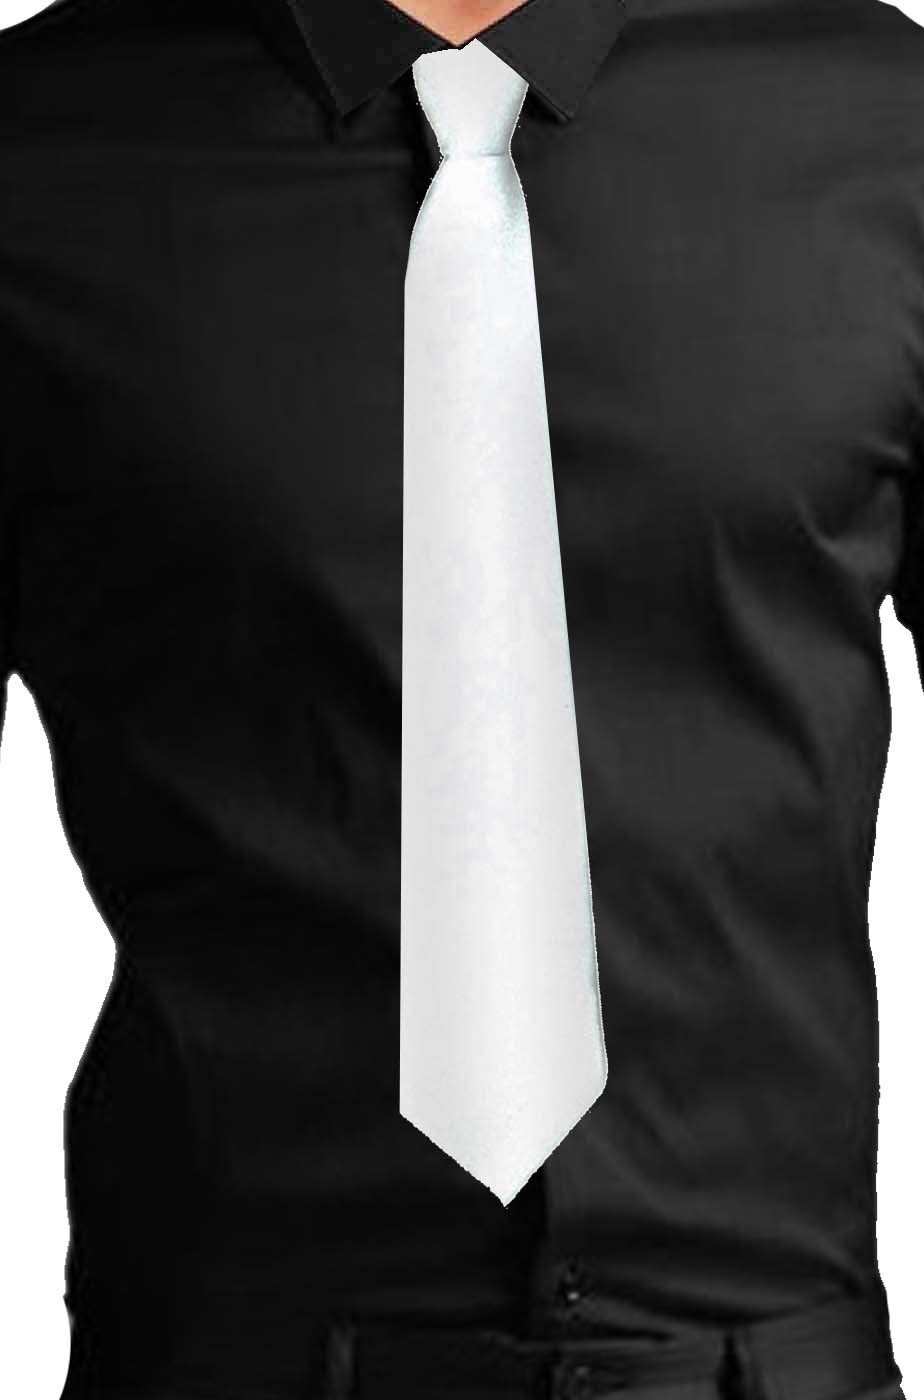 Cravatta finta con elastico bianca in satin (lame')